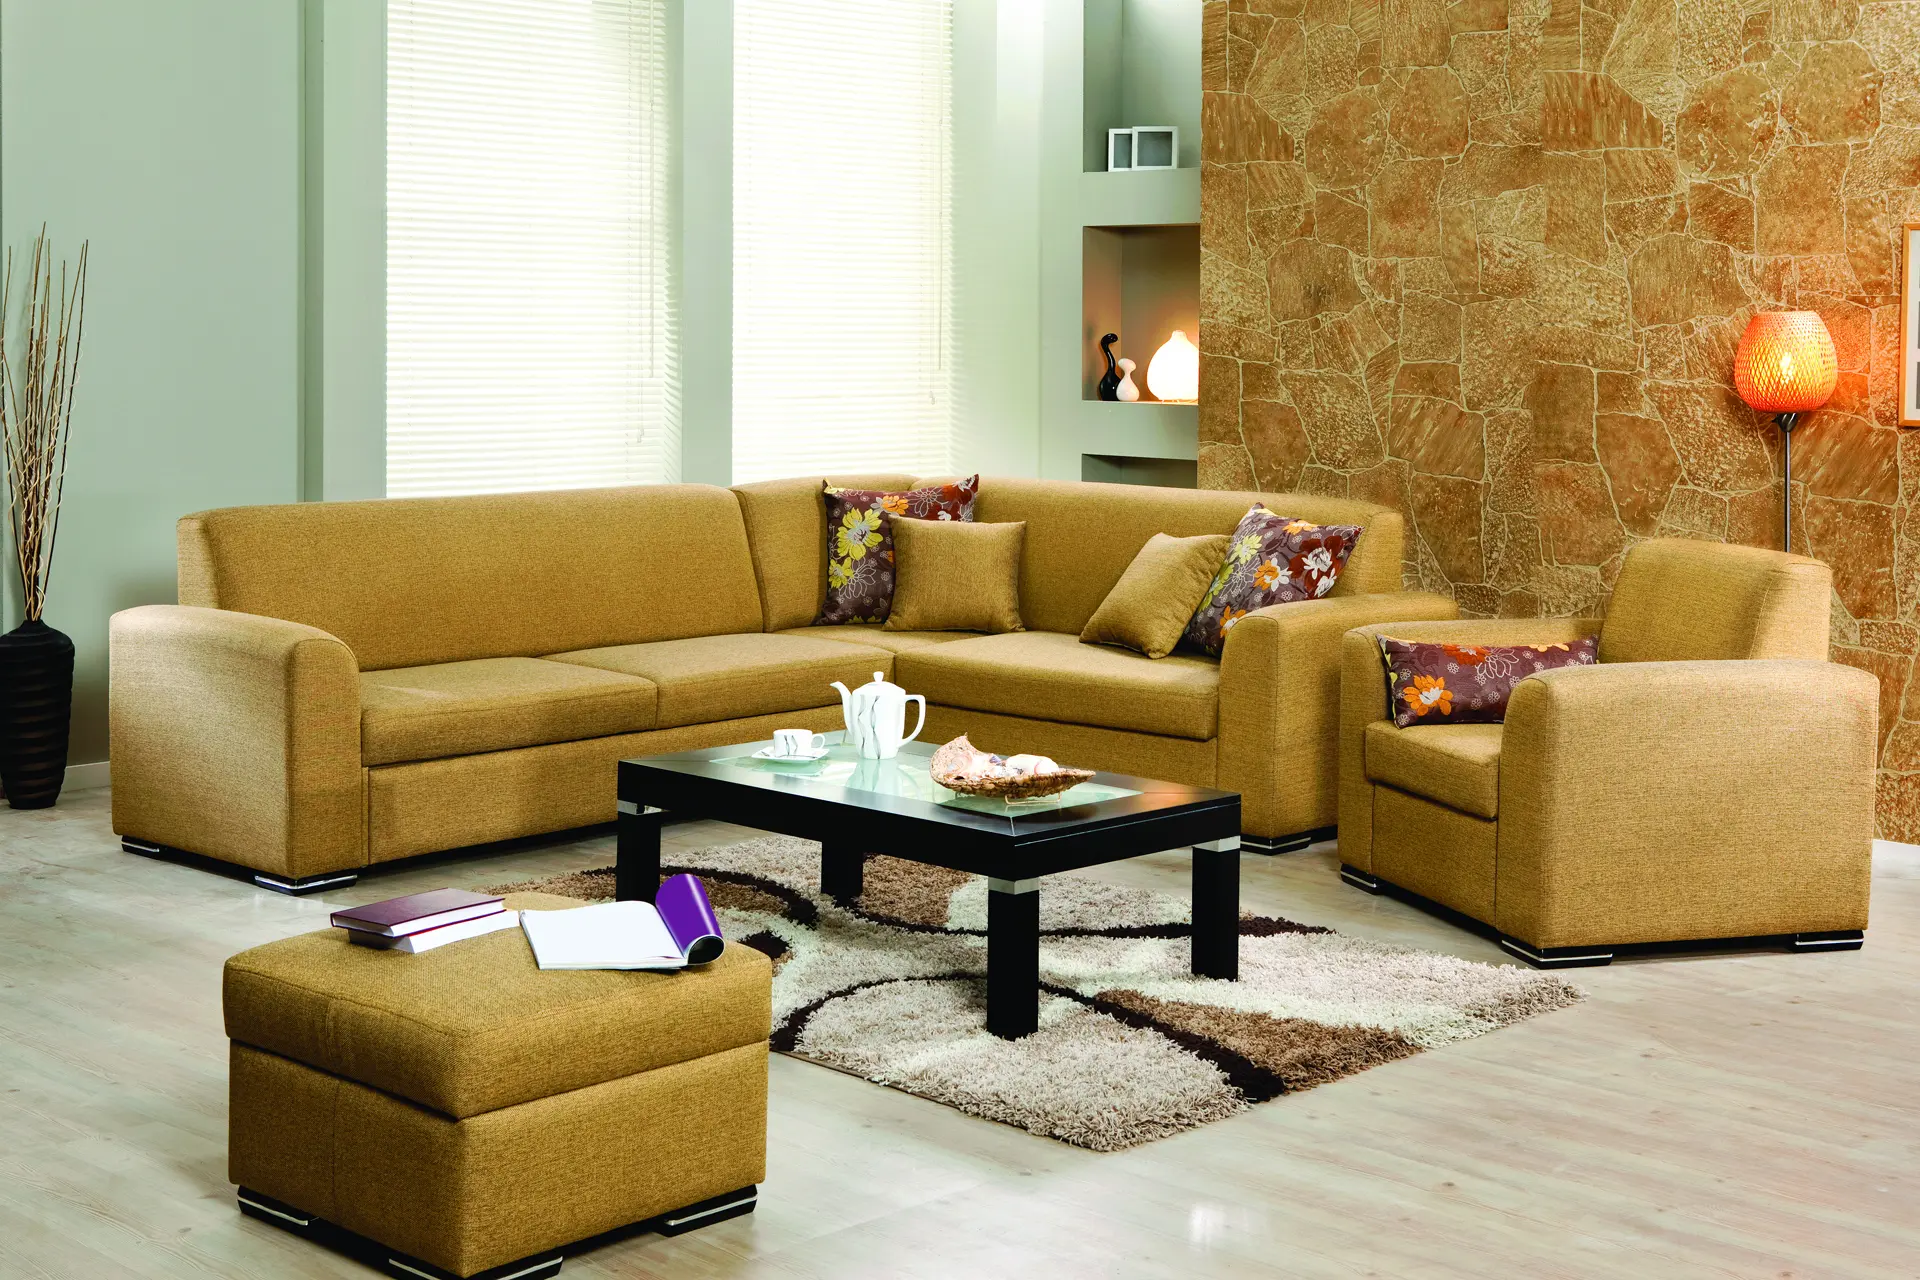 The Bay Furniture Company S23 Sofas Range